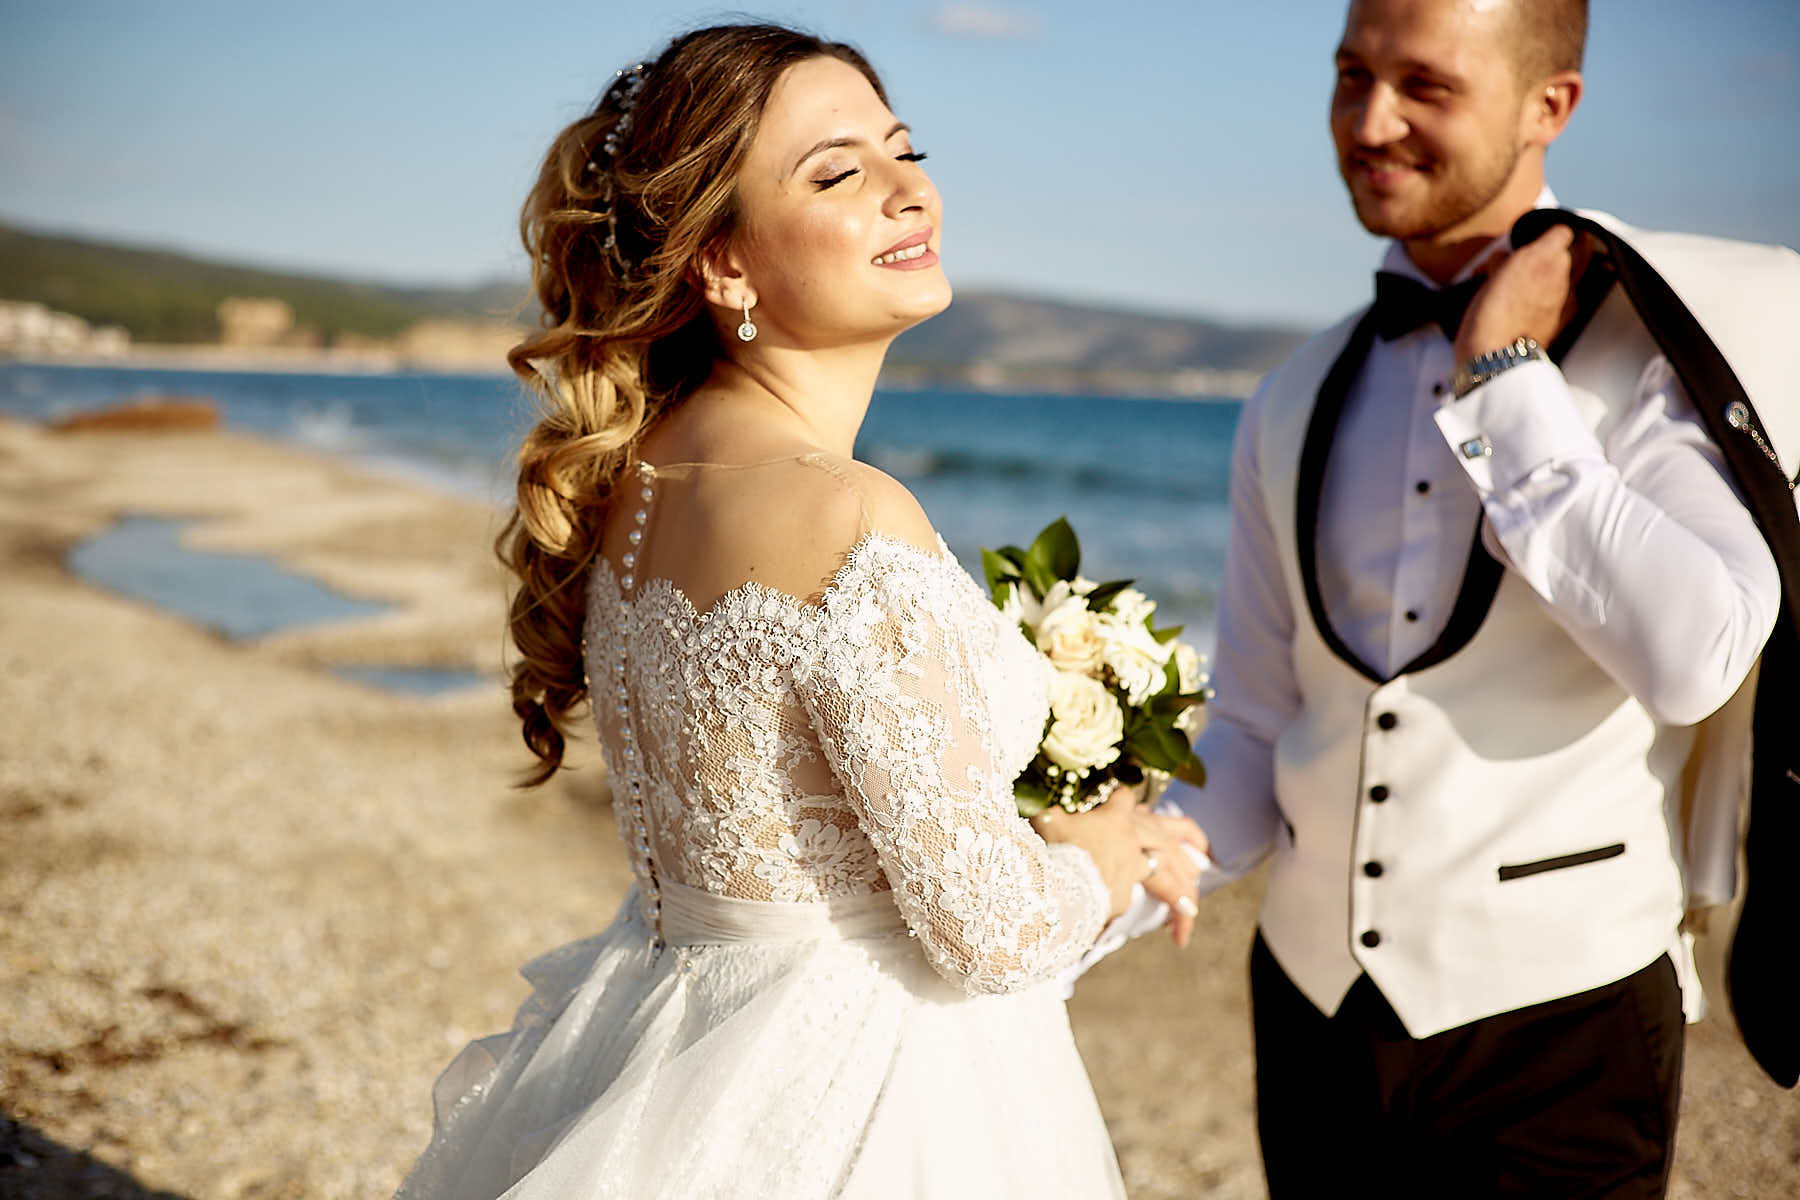 Bride smiling while sunbathing, groom smiling looking at her wife